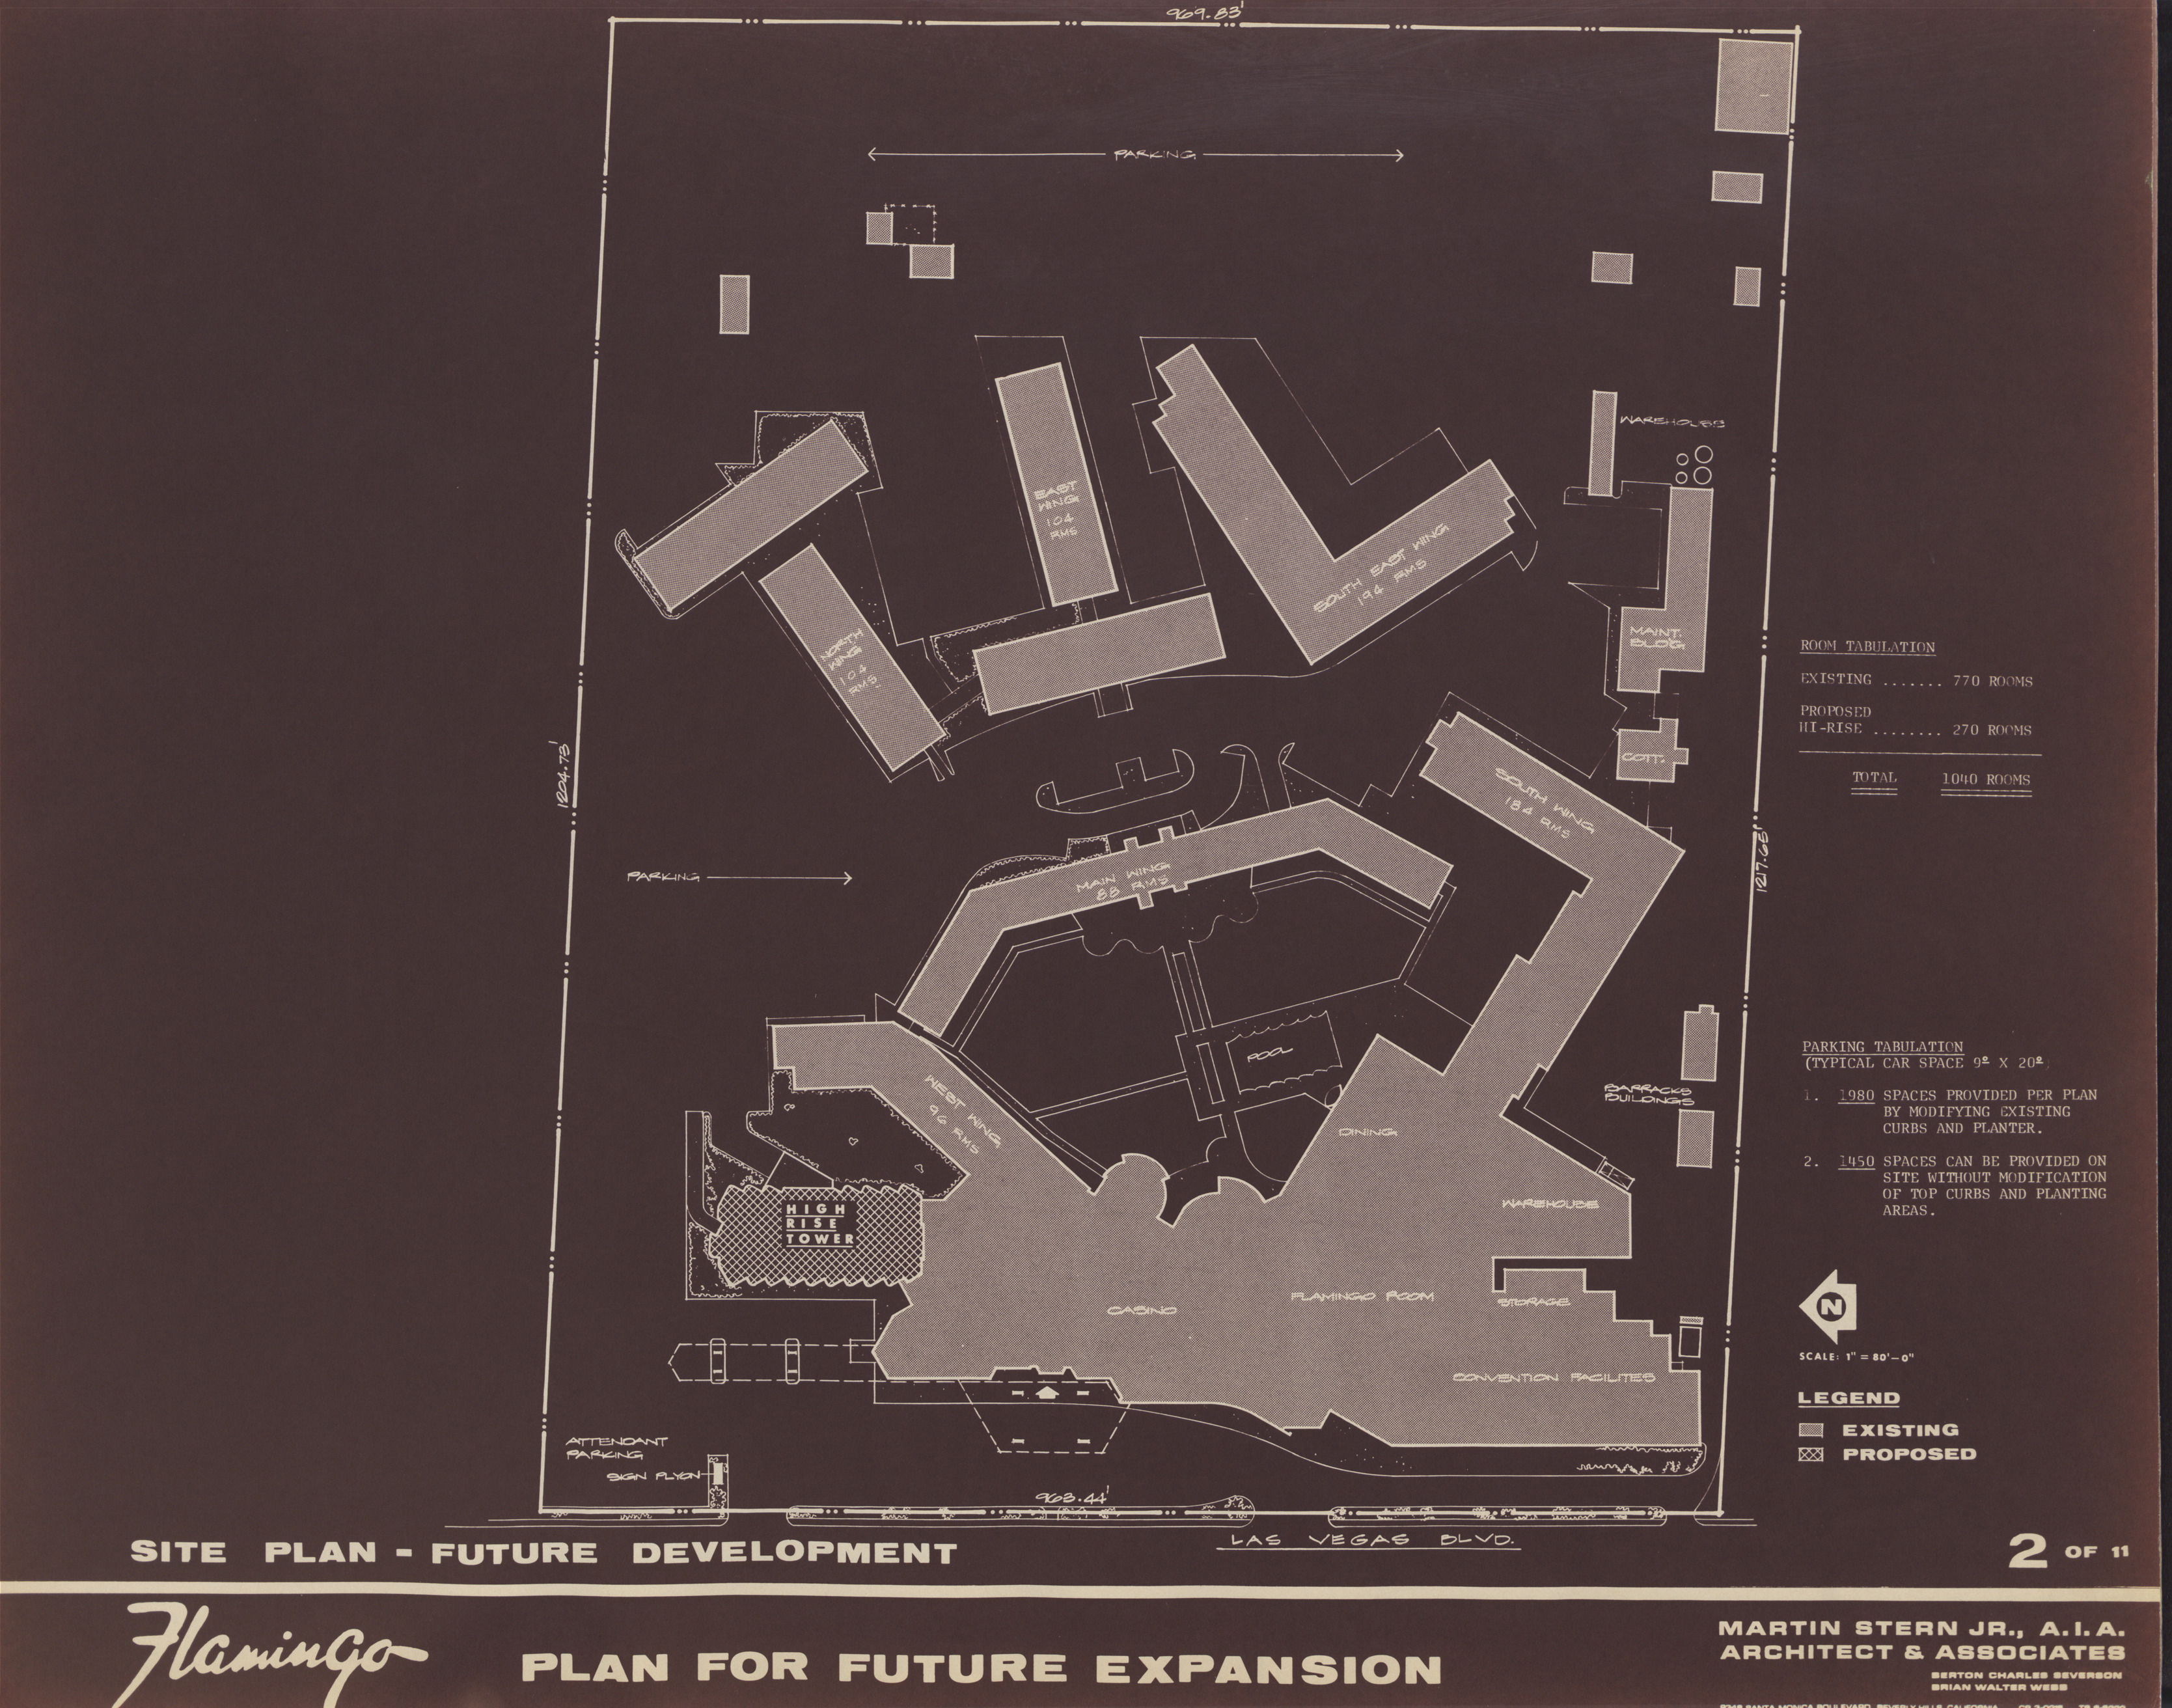 Flamingo Plan for Future Expansion Proposal, image 2